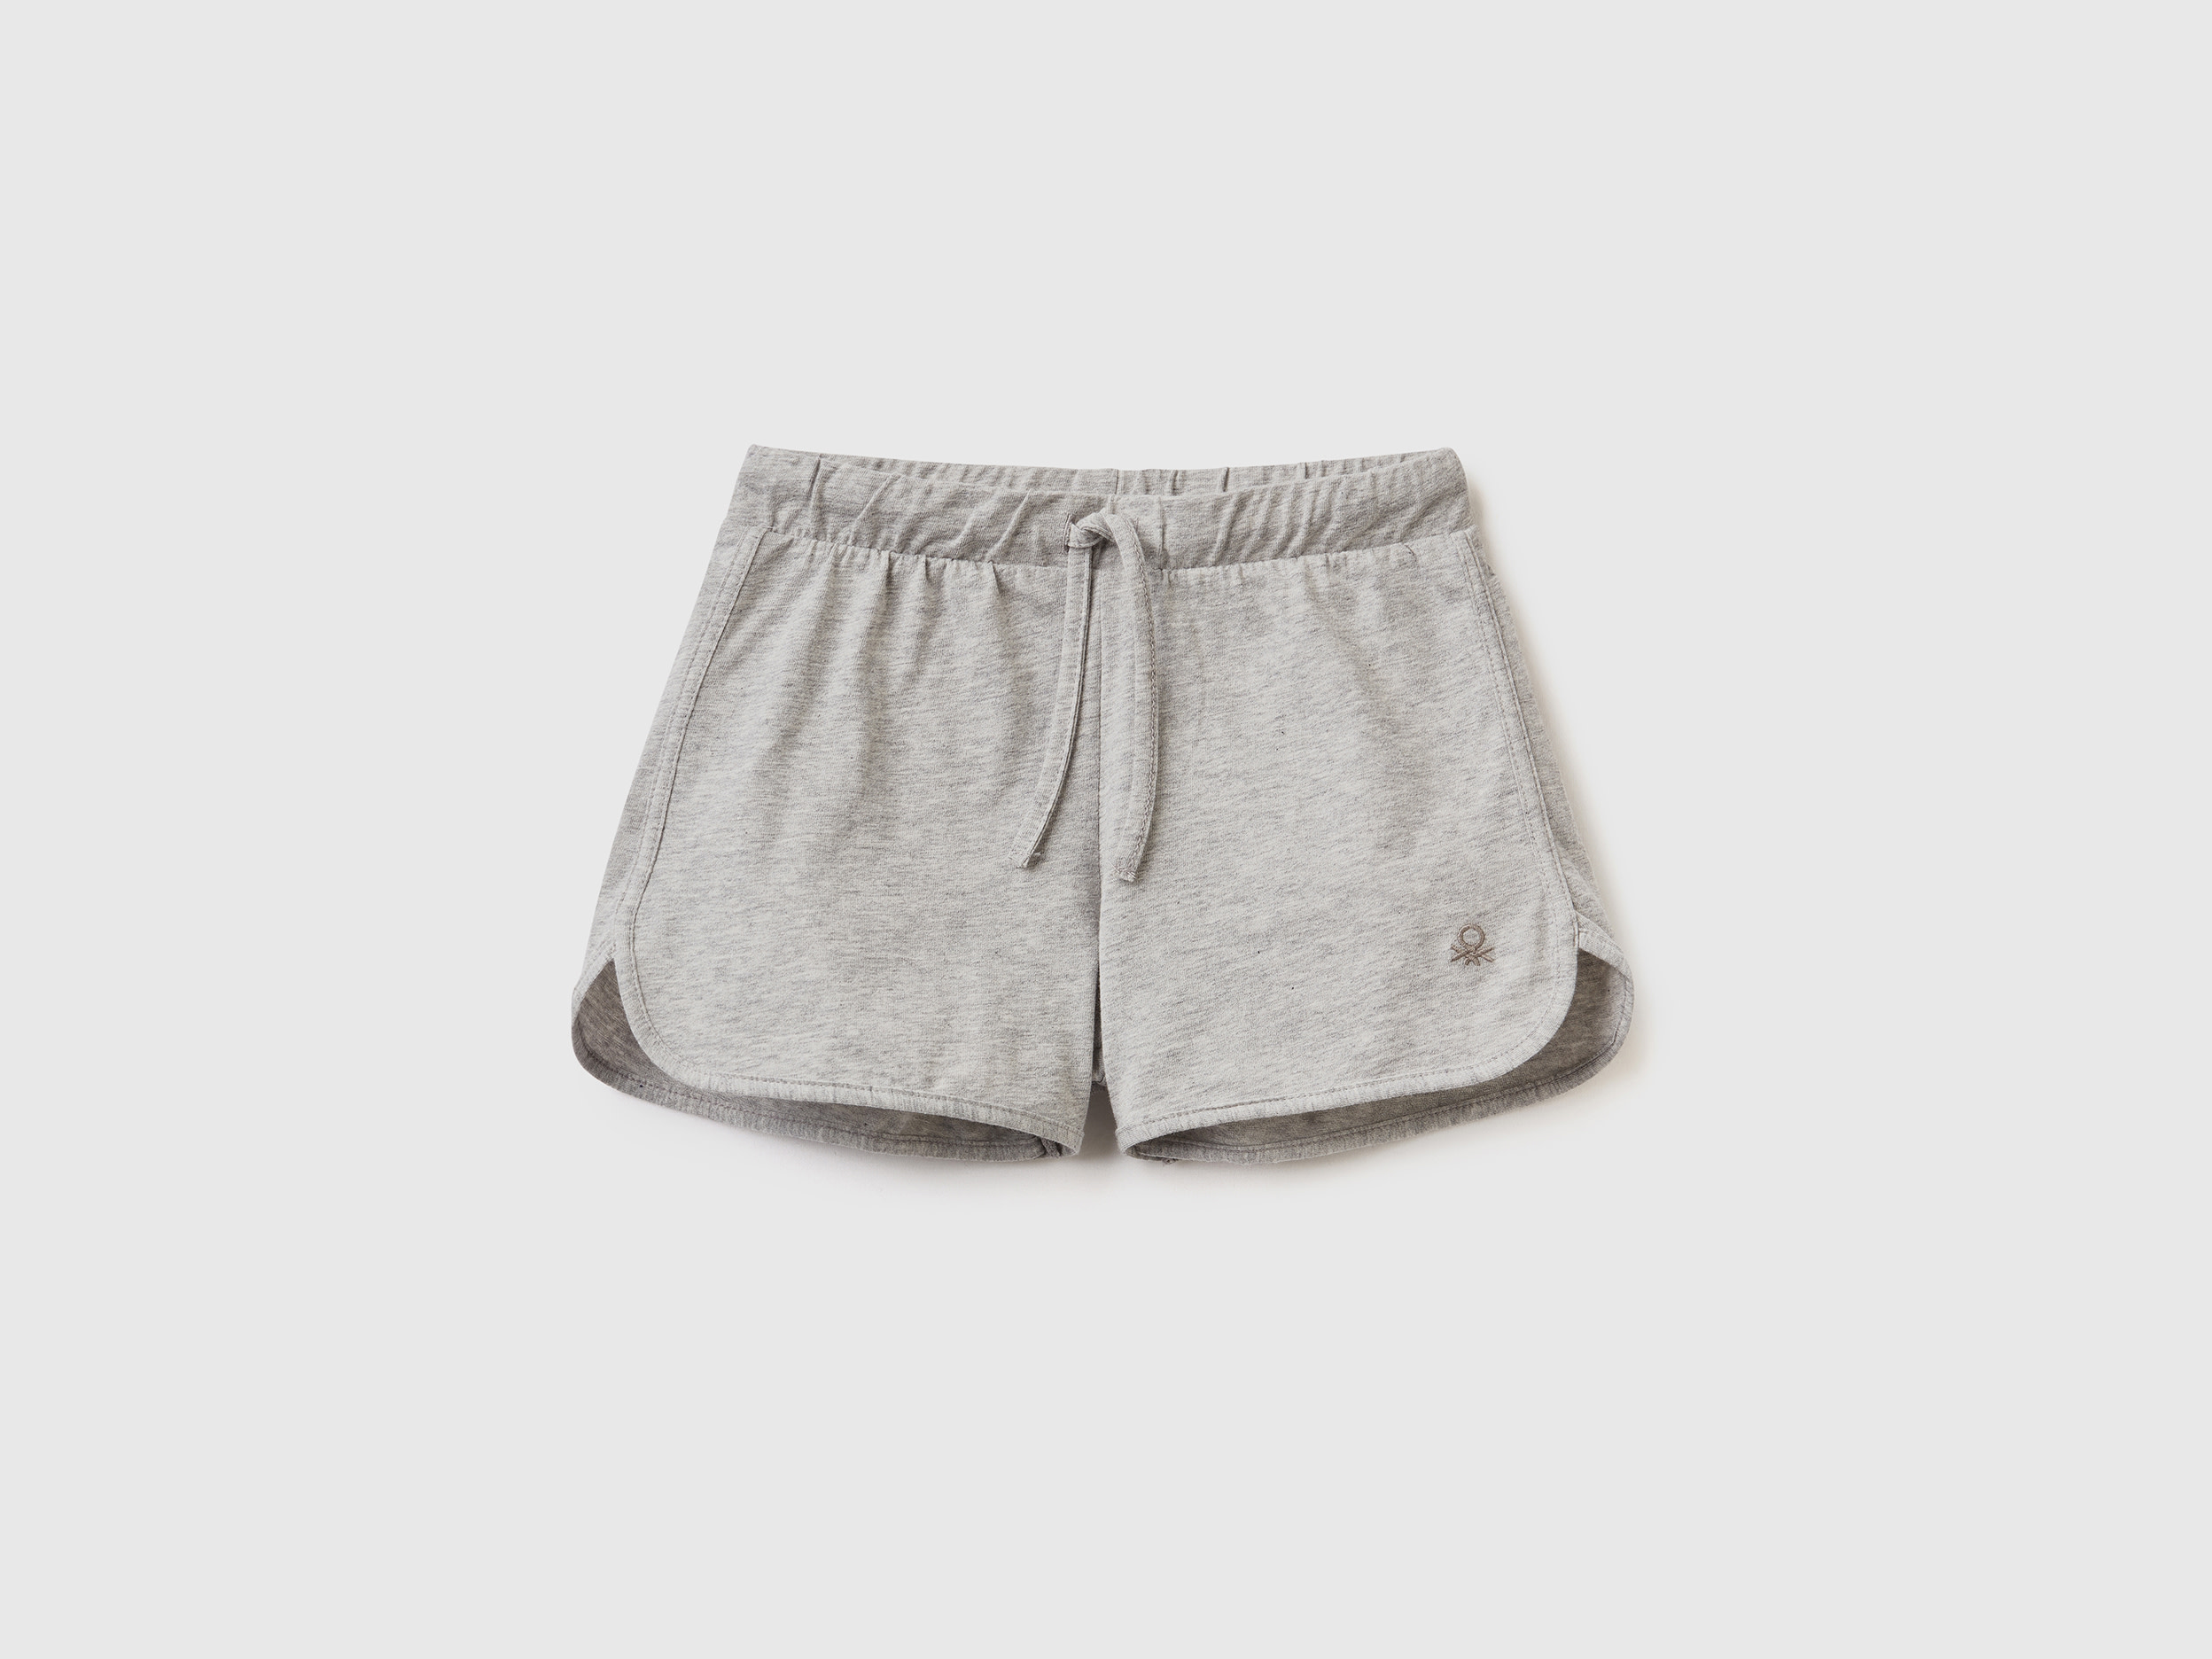 Benetton, Runner Style Shorts In Organic Cotton, size 2XL, Light Gray, Kids